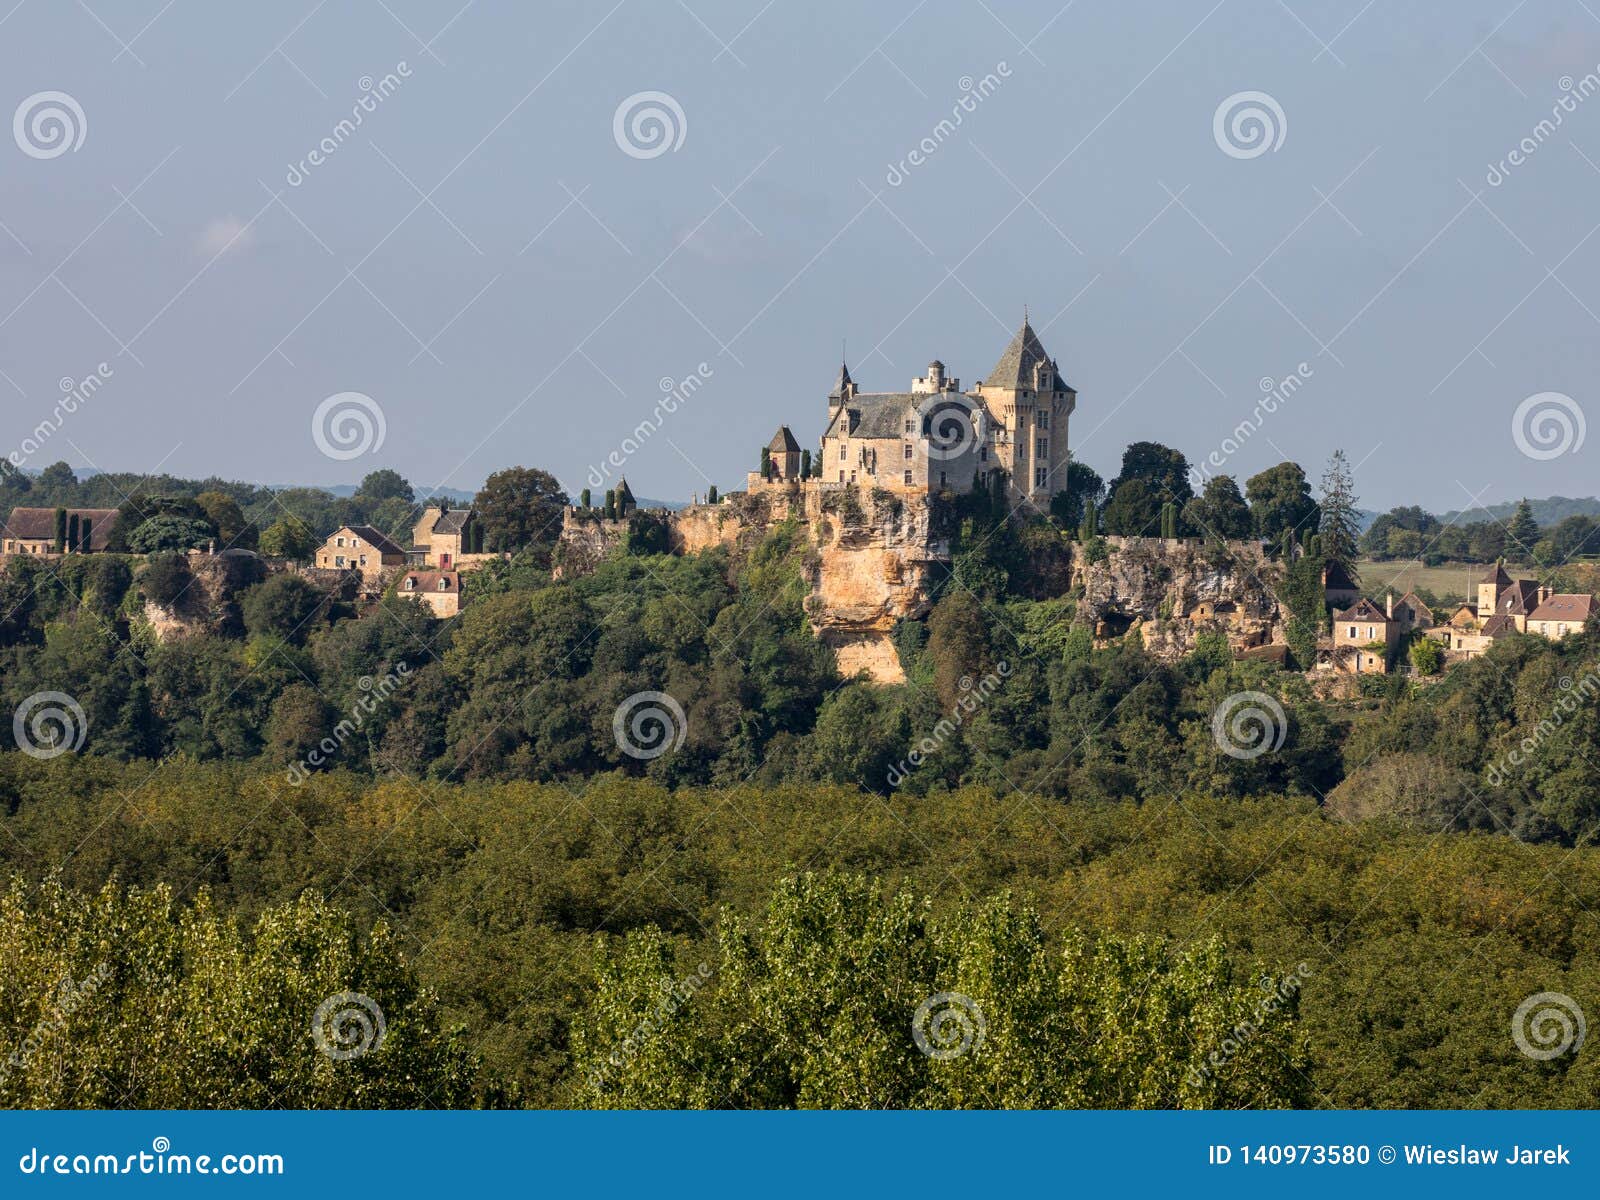 Chateau De Montfort in the Dordogne Valley. France Stock Photo - Image